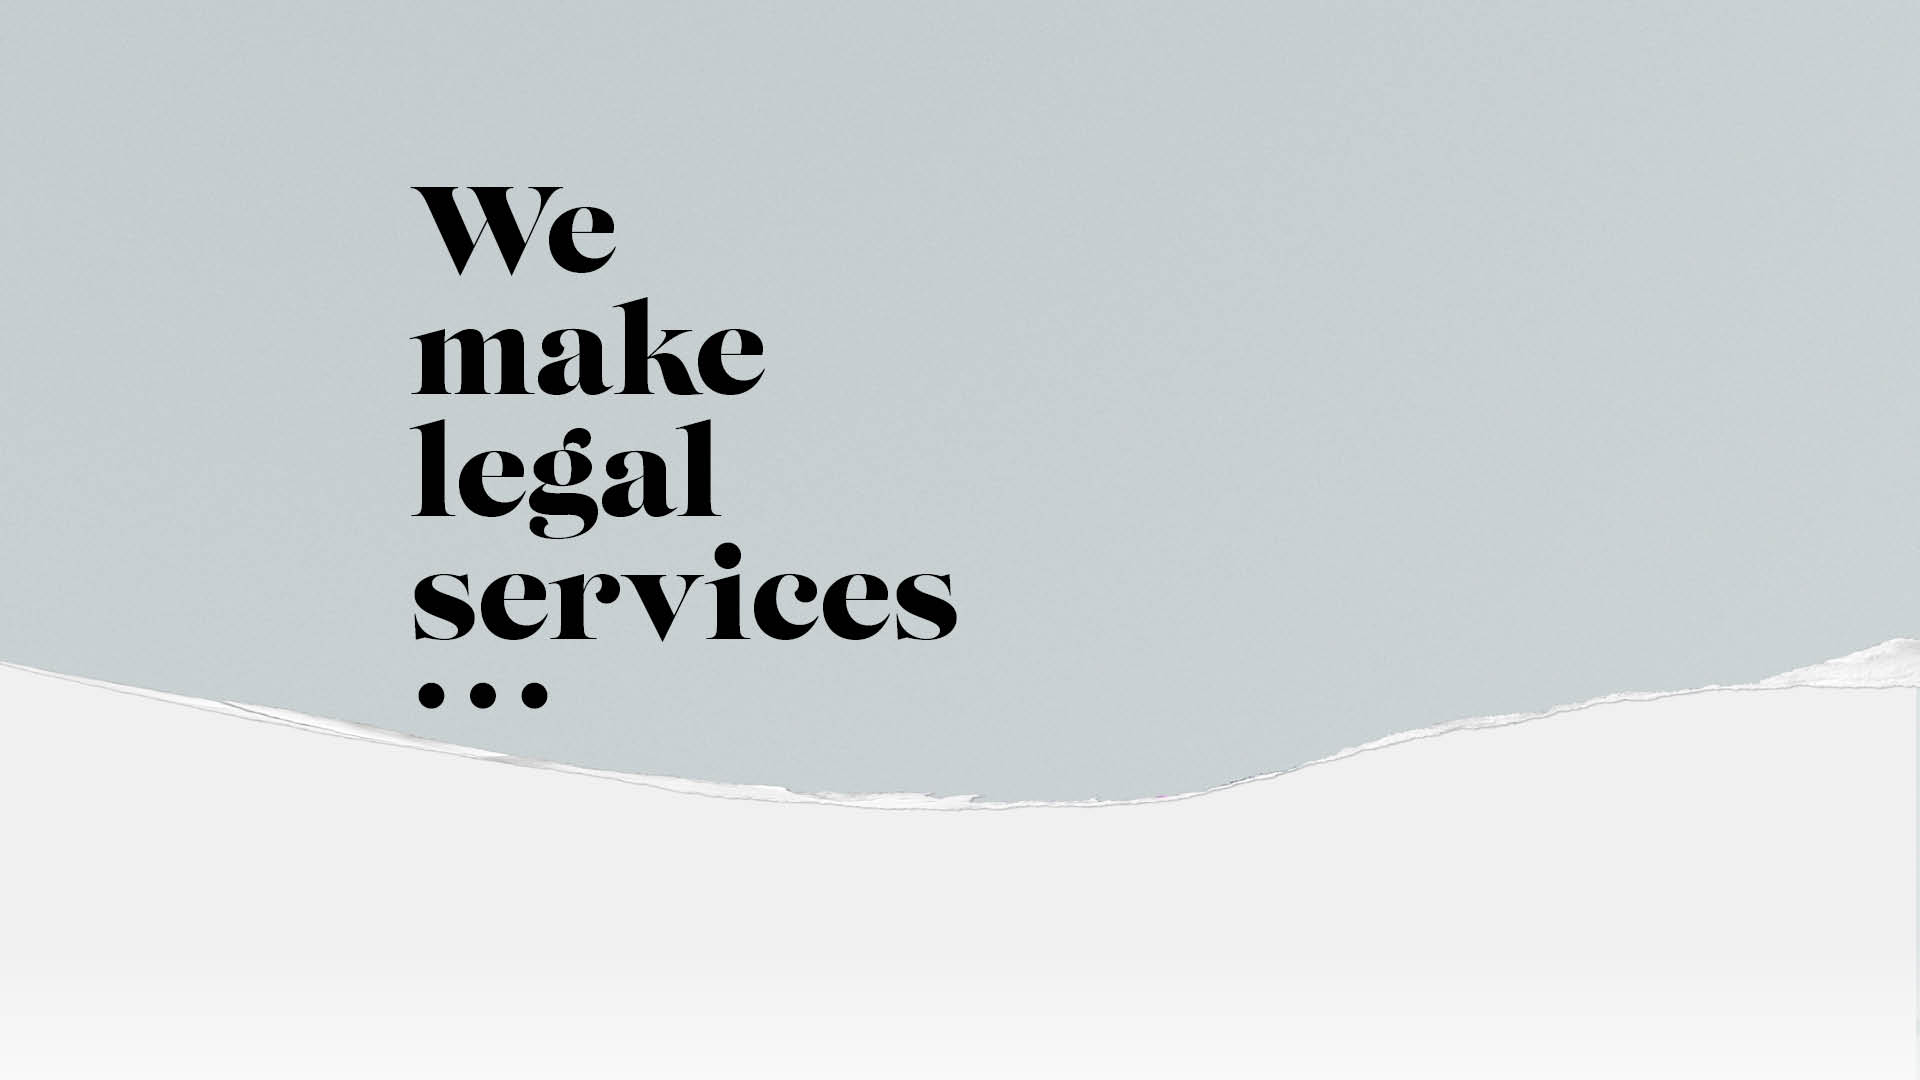 We make legal services